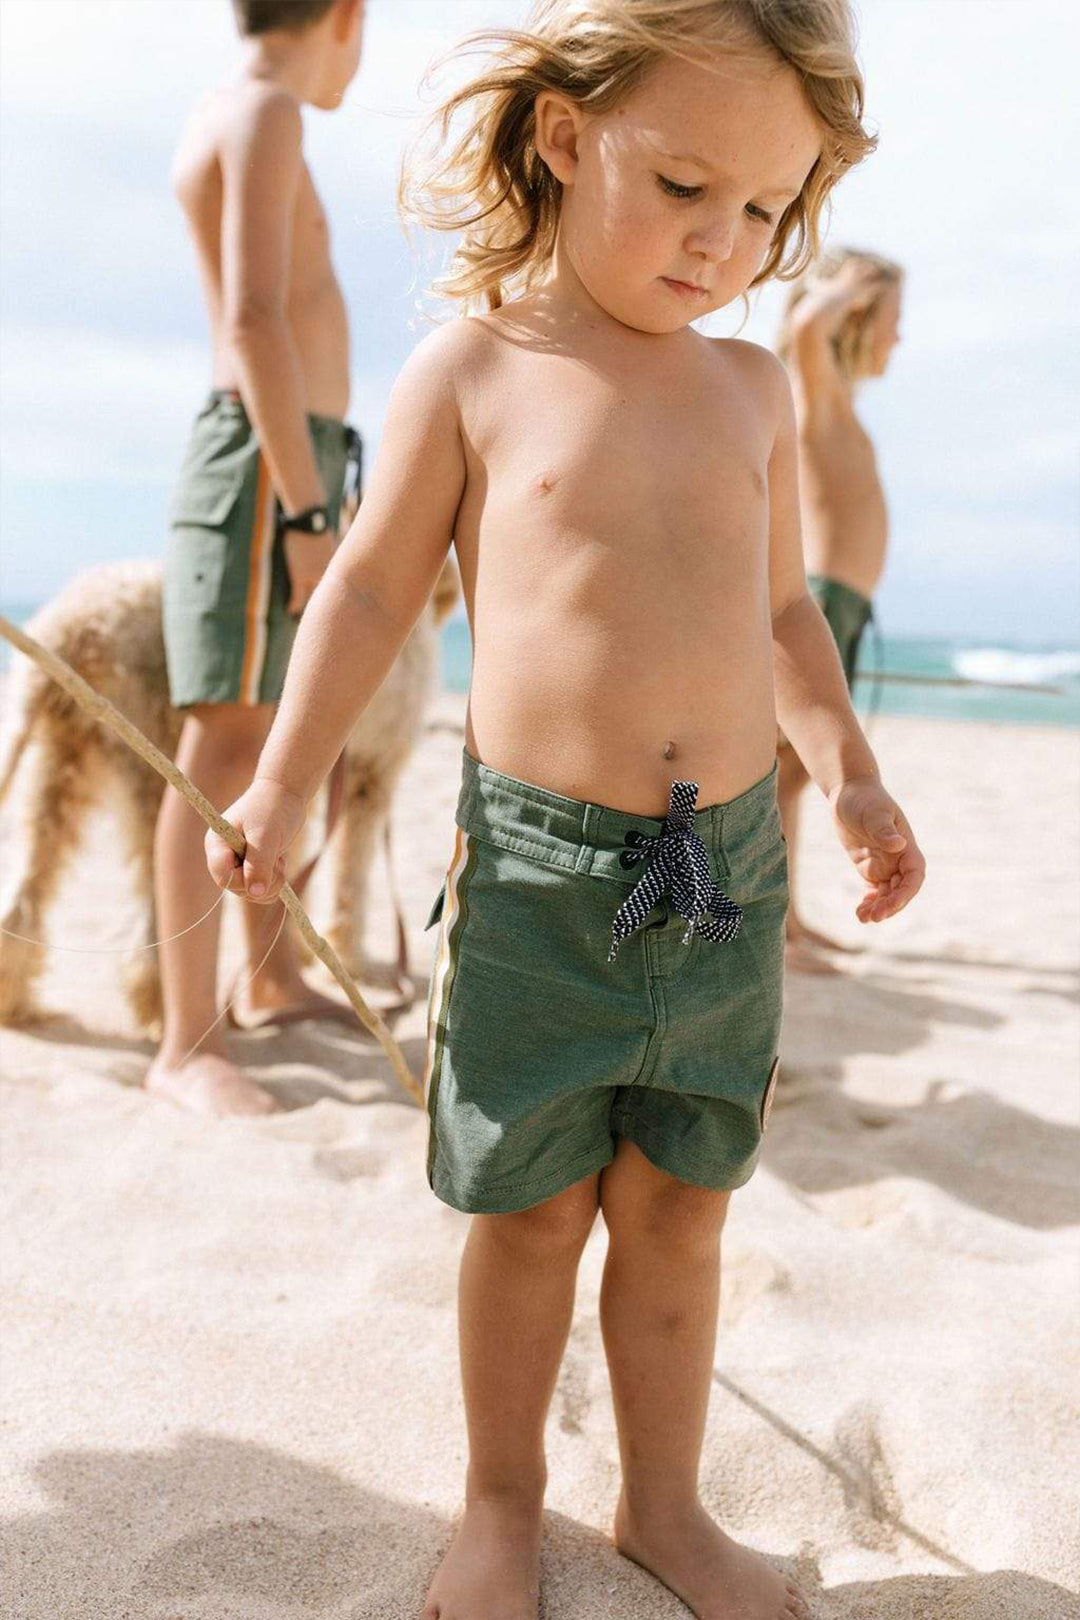 Kid's Townshorts Swimsuit - Green Seagrass Ribbon Trim